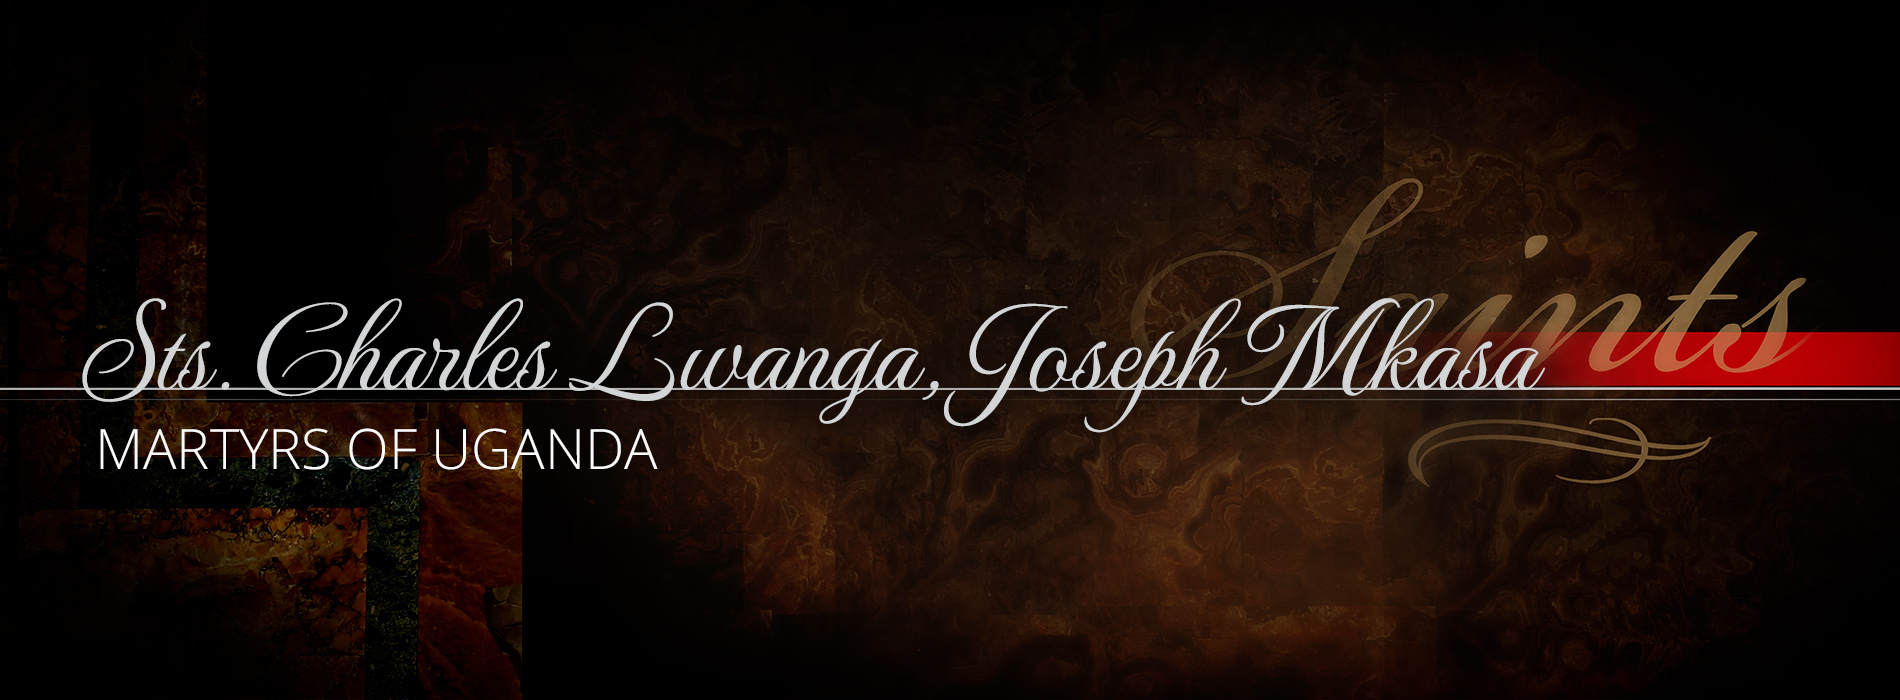 Sts. Charles Lwanga, Joseph Mkasa, Martyrs of Uganda